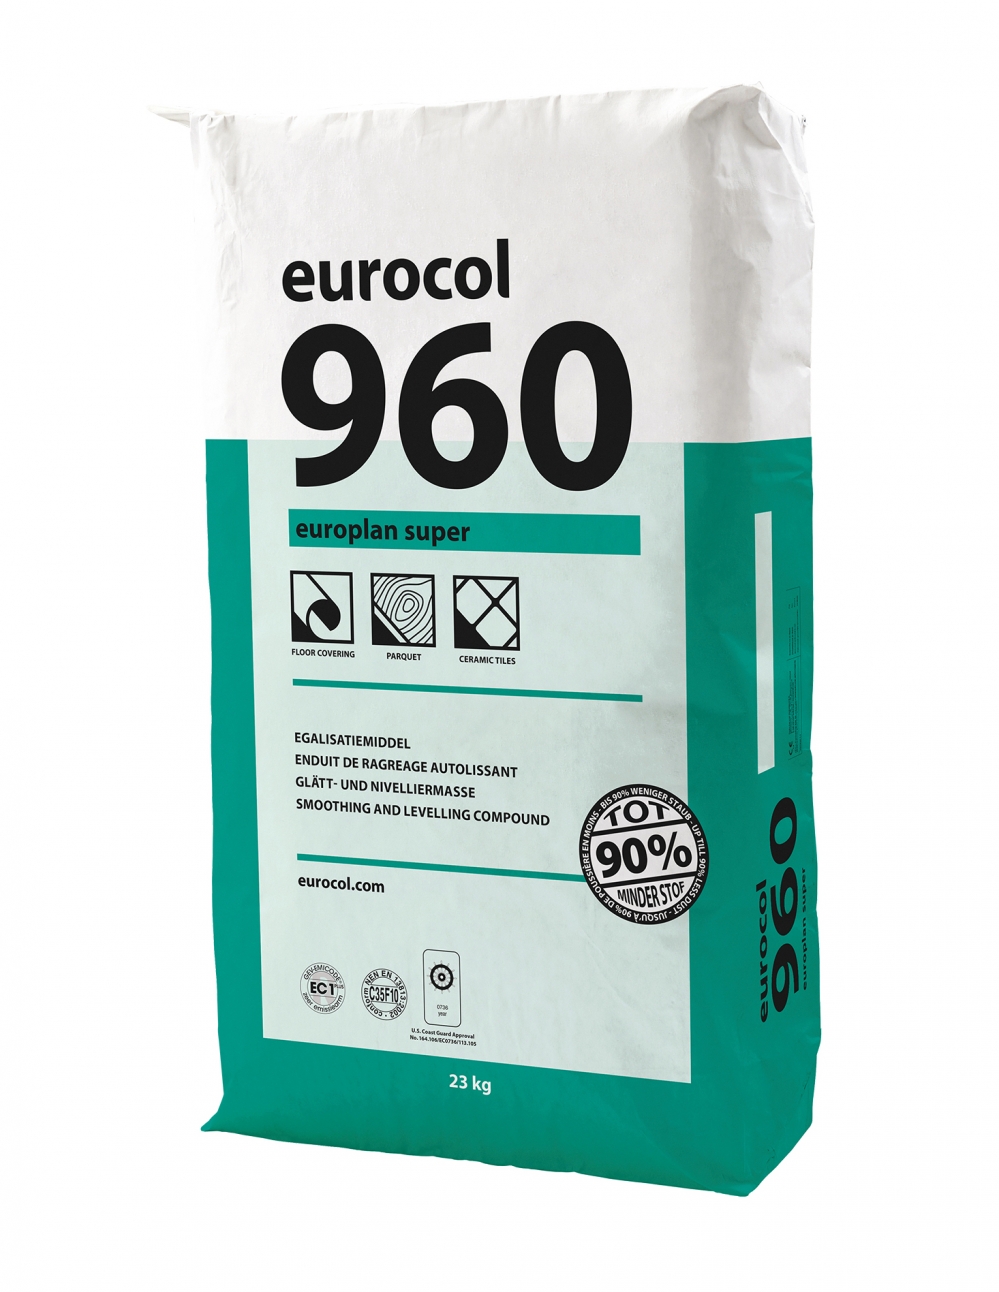 Eurocol-960-egaline